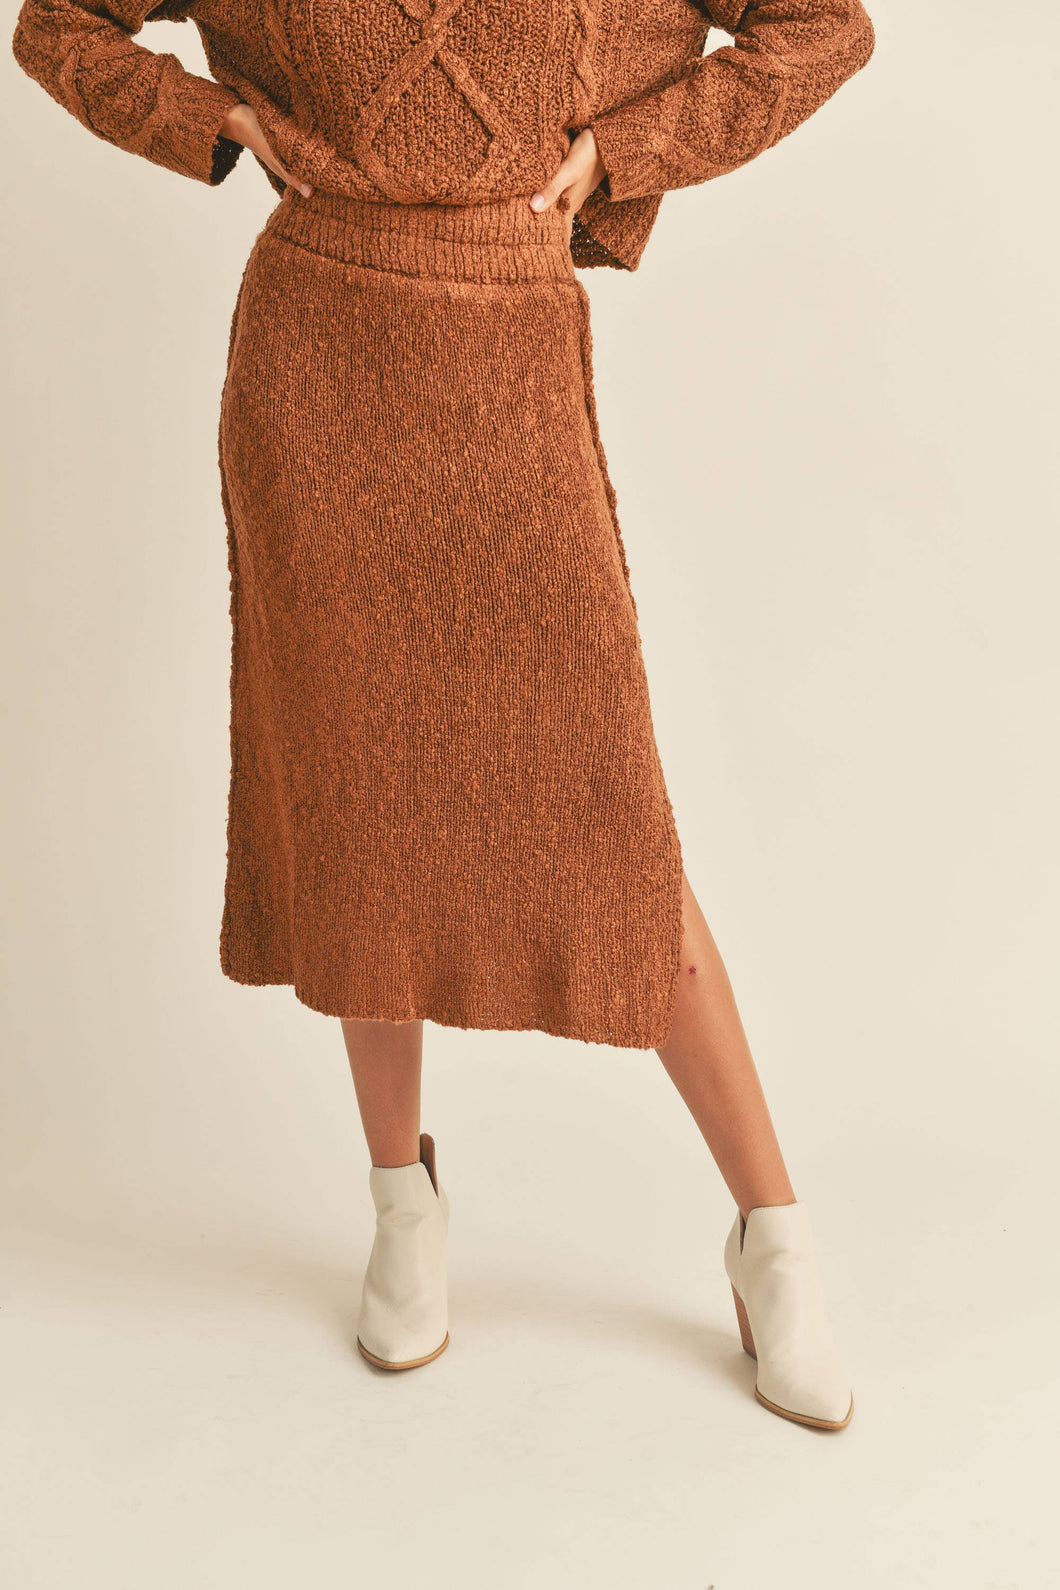 Knitted Sweater Skirt